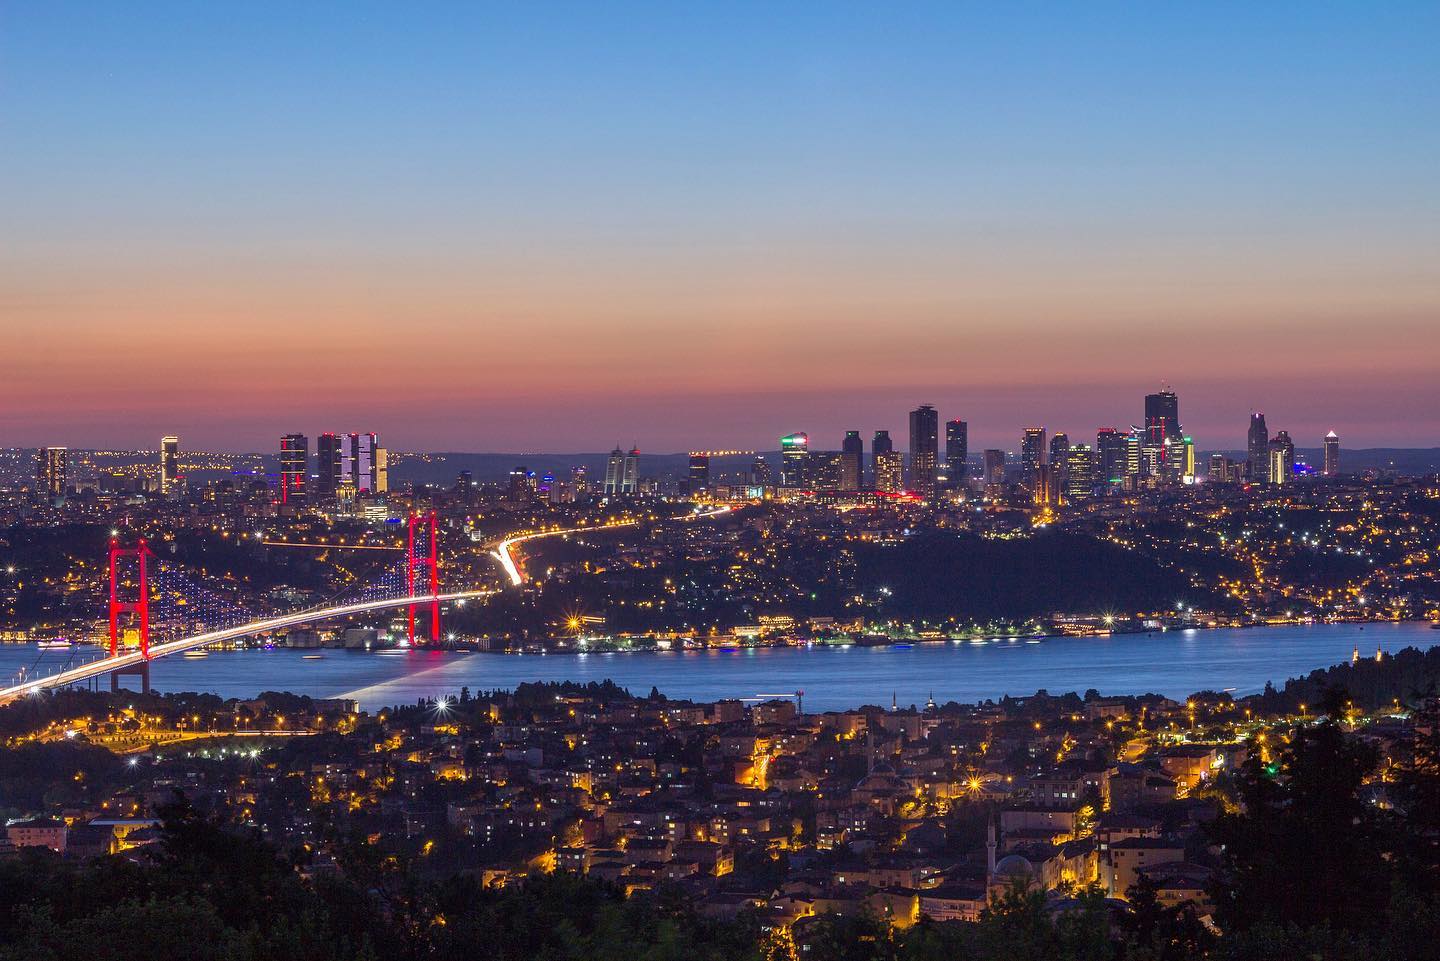 Great view over Istanbul during sunset 🌅
.
.
#istanbul #turkey #türkiye #bosphorus #bosphorusbridge #camlica #çamlıcacamii #sightseeing #long_exposure #night #istanbulturkey #wonderful_places #beautifulplaces #canon #instagram #travel #traveler #europe #asia #europetoasia  #traveling #travelblog #travelblogger #istanbulbestpictures #bluehour #nightphotos #nightphotograpy #bridgeview #NIGHTSHOOTERS